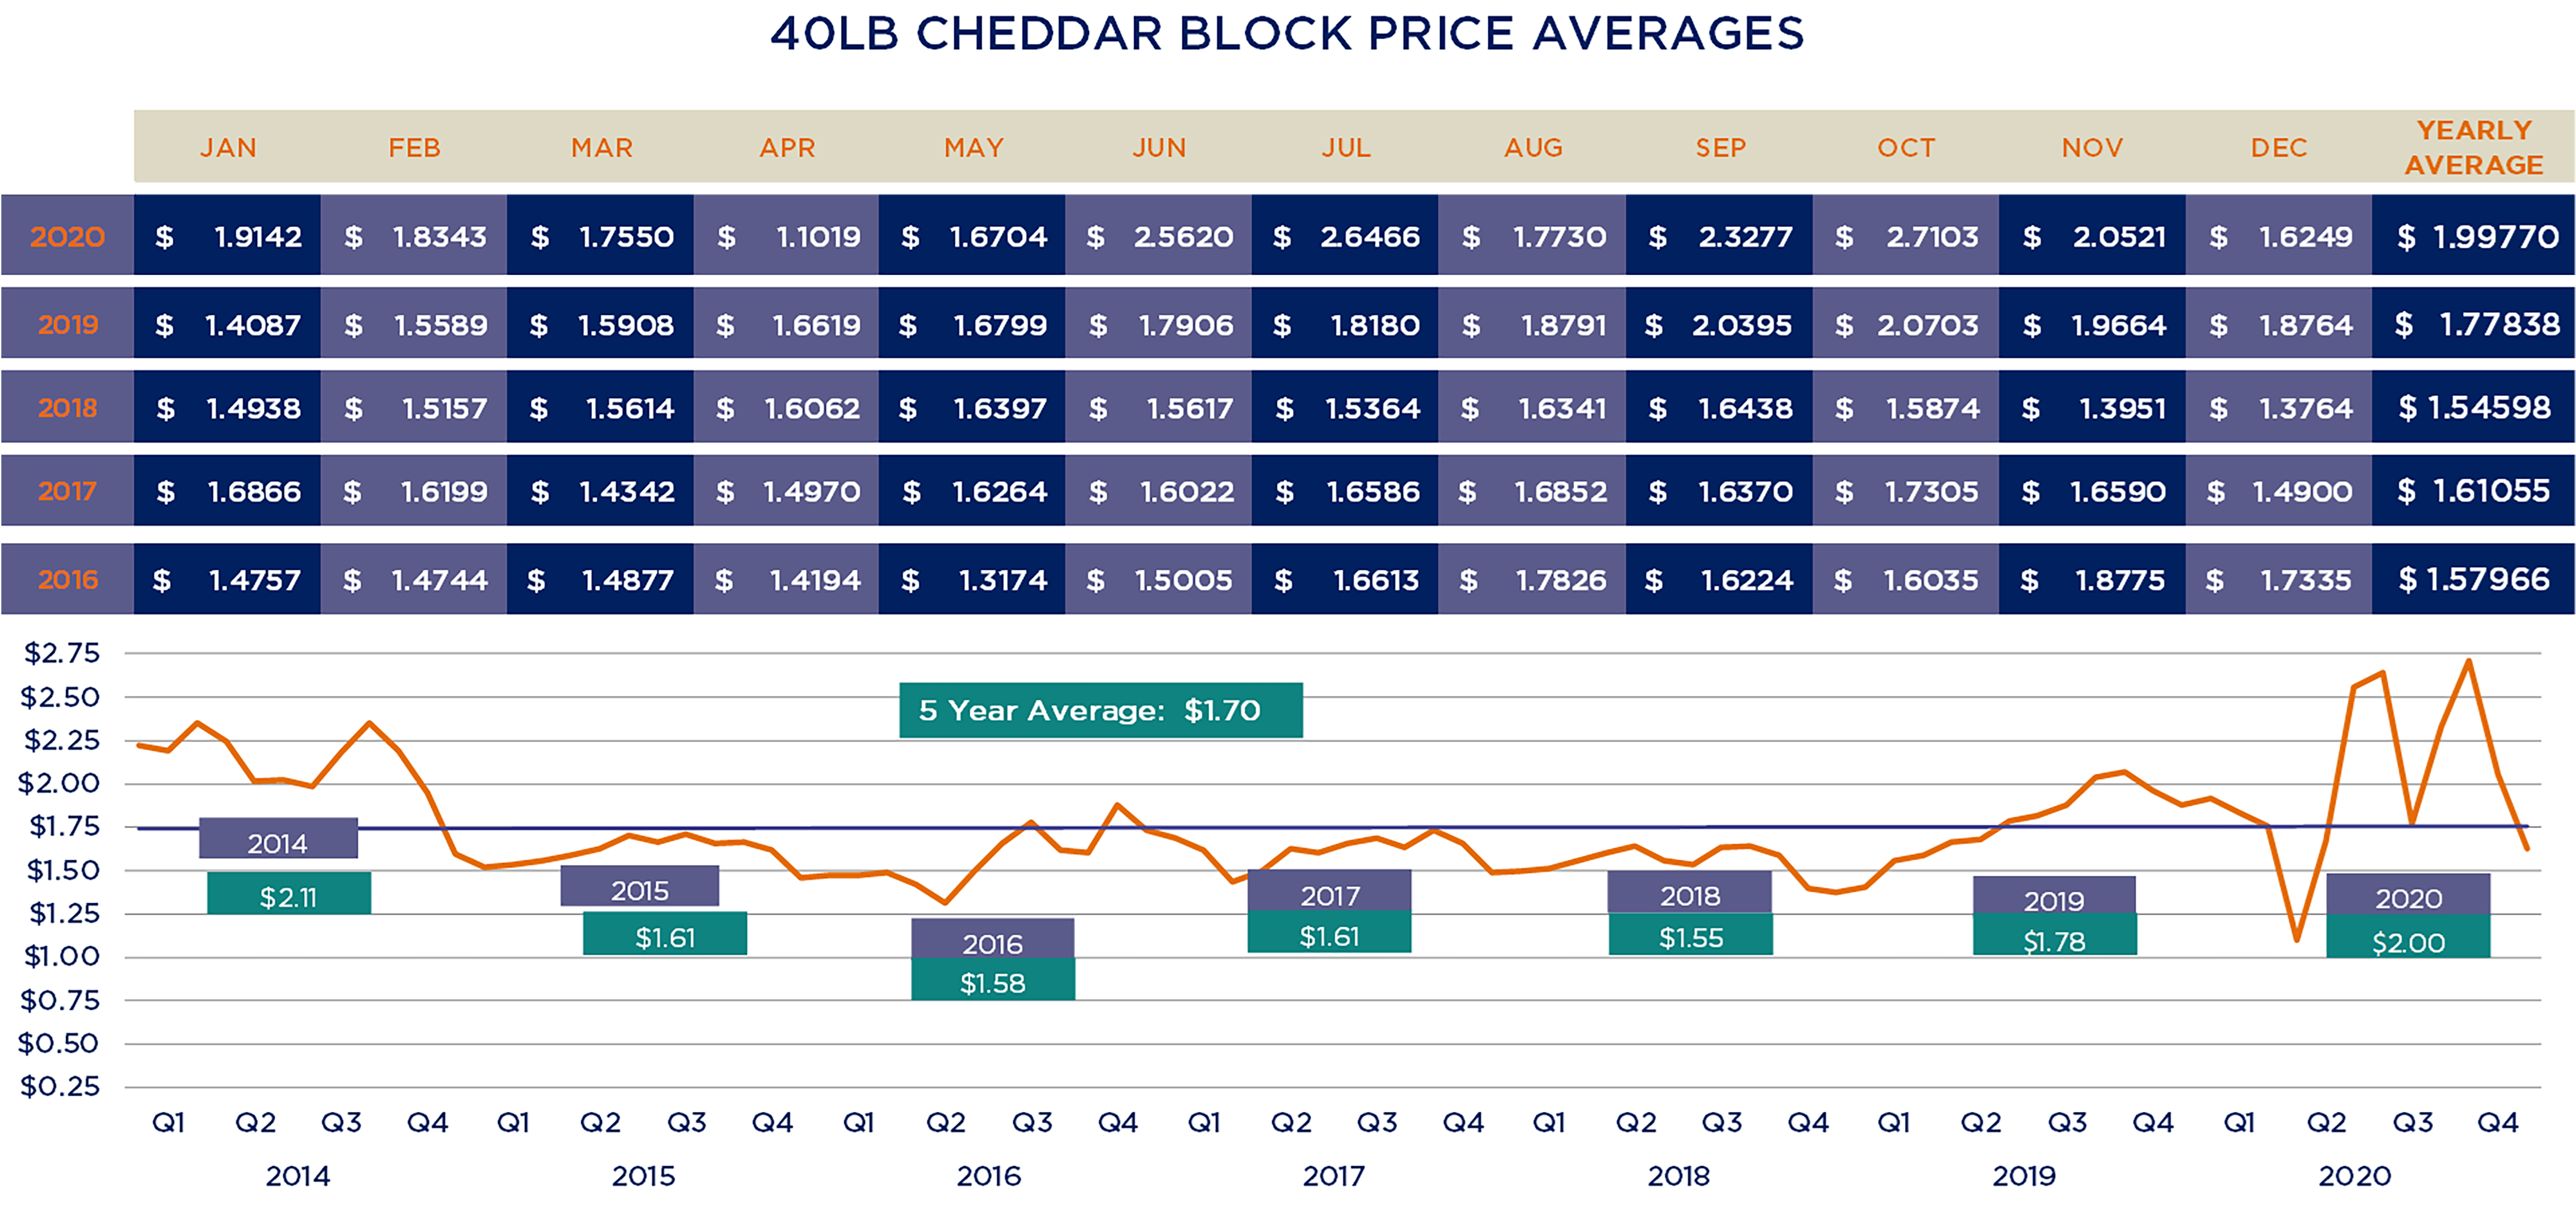 40LB-CHEDDAR-BLOCK-PRICE-AVERAGES_DEC2020